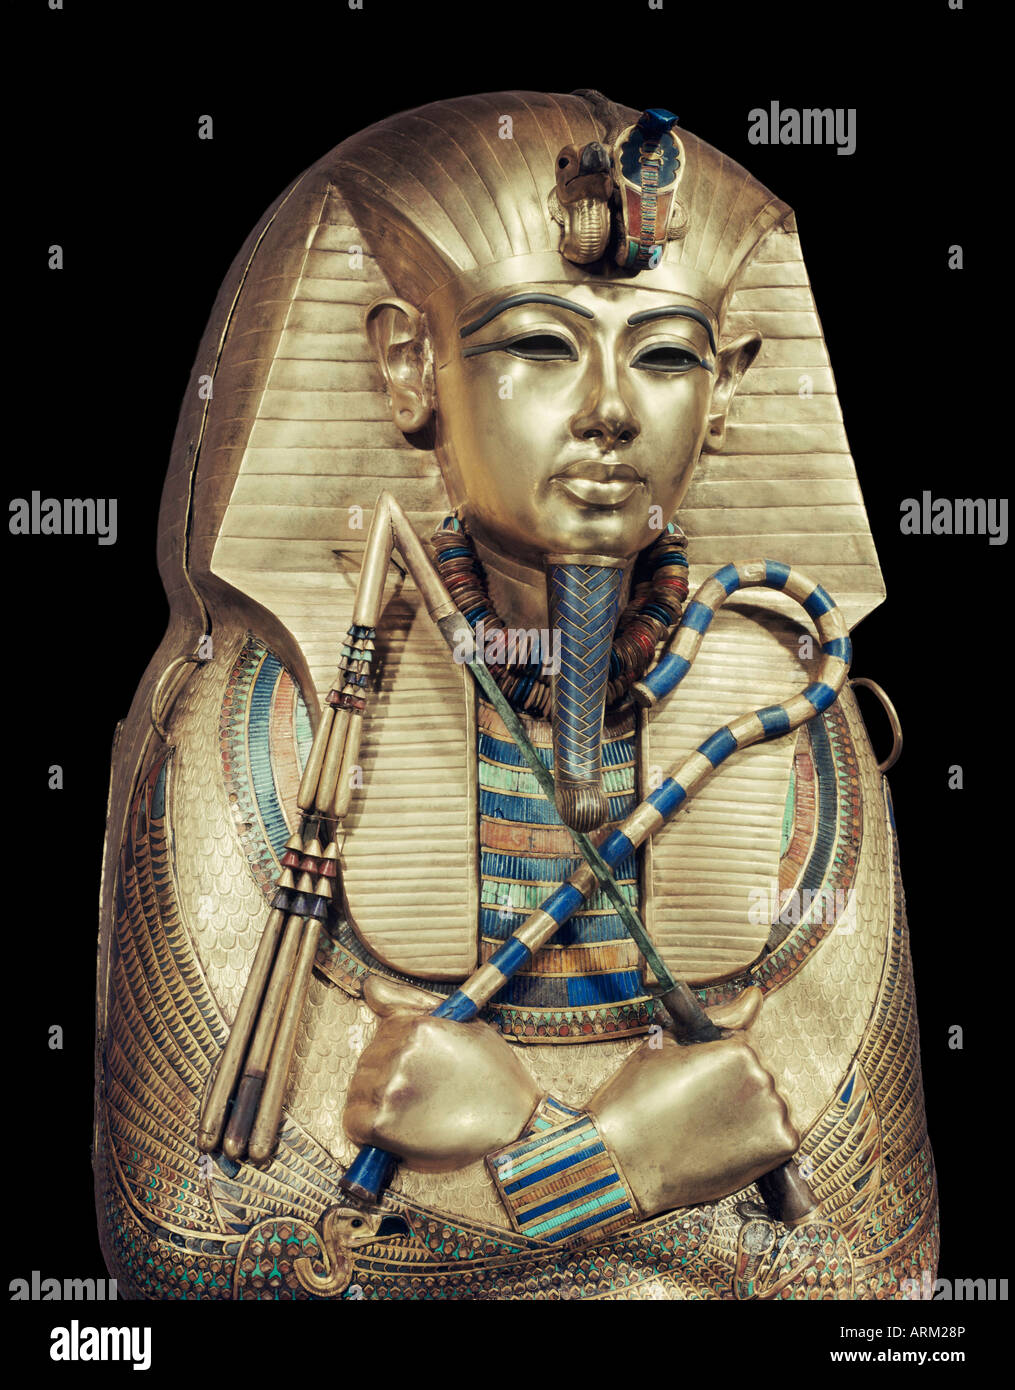 Mummiform coffin of gold with inlaid semi-precious stones, depicting the god Osiris, from the tomb of the pharaoh Tutankhamun Stock Photo